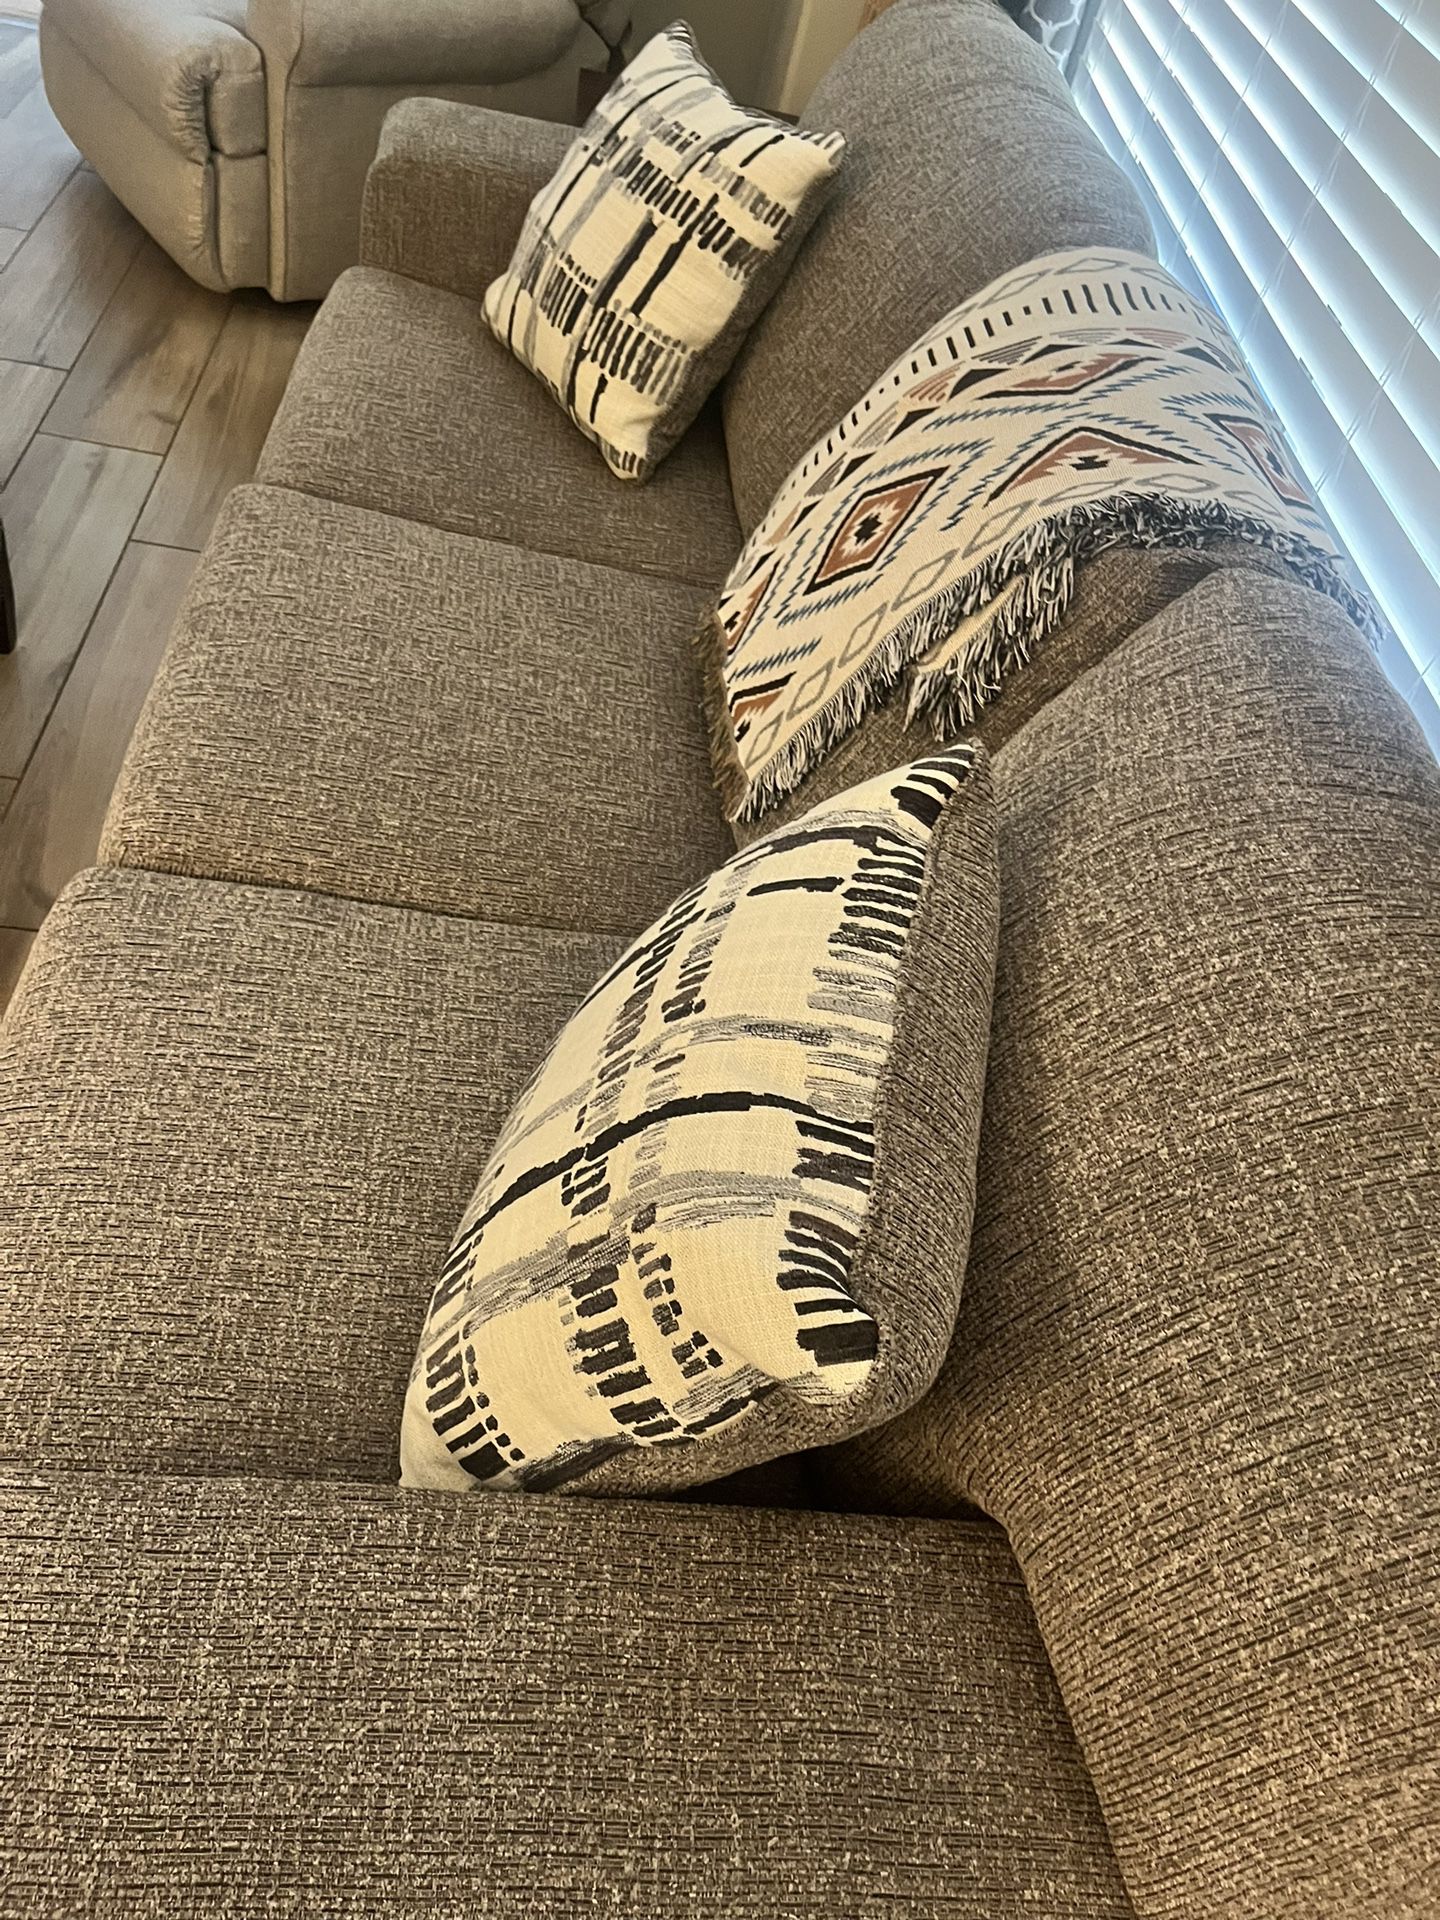 Sofa with Pillows